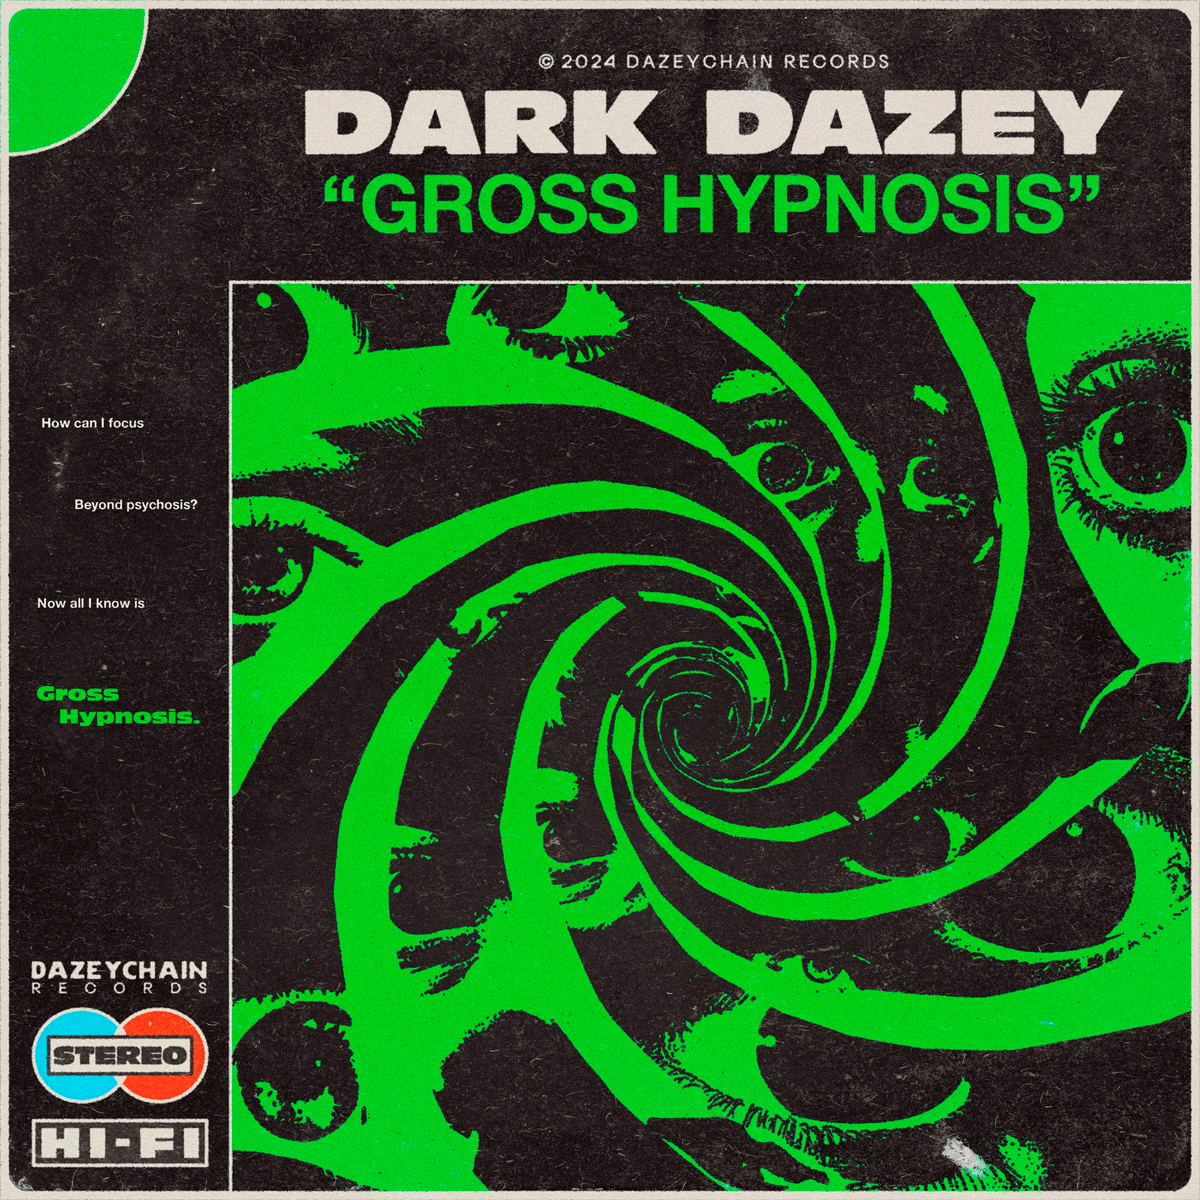 DARK DAZEY / “Gross Hypnosis”